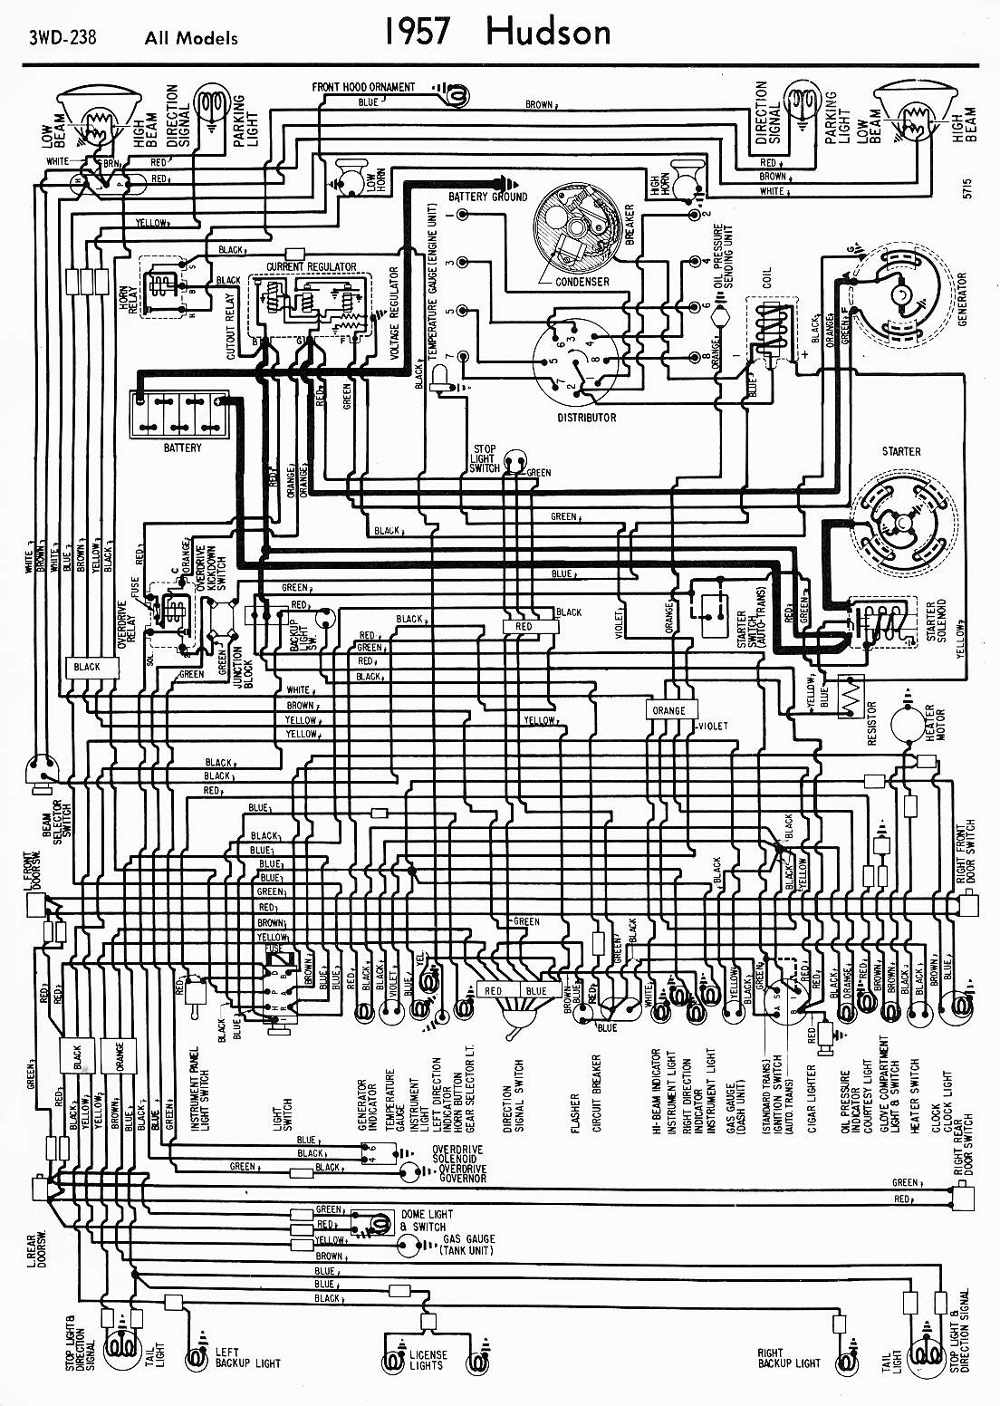 HUDSON - Car PDF Manual, Wiring Diagram & Fault Codes DTC